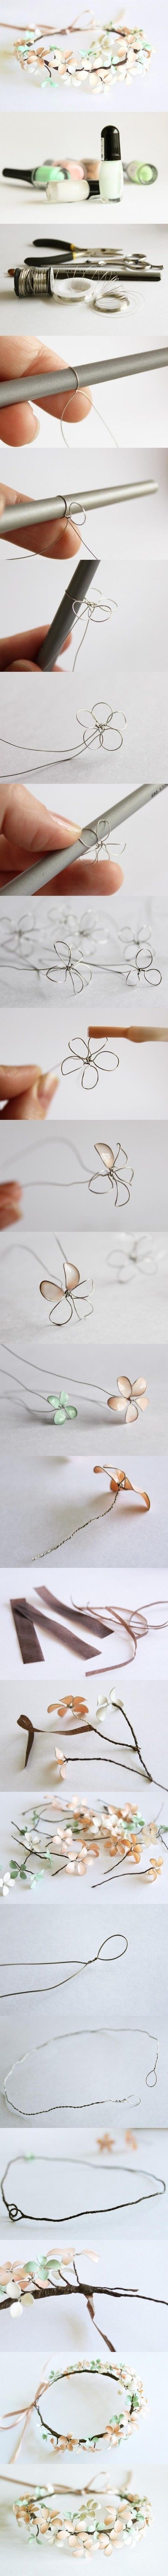 Amazing! Make beautiful flowers from wire & nail polish!!